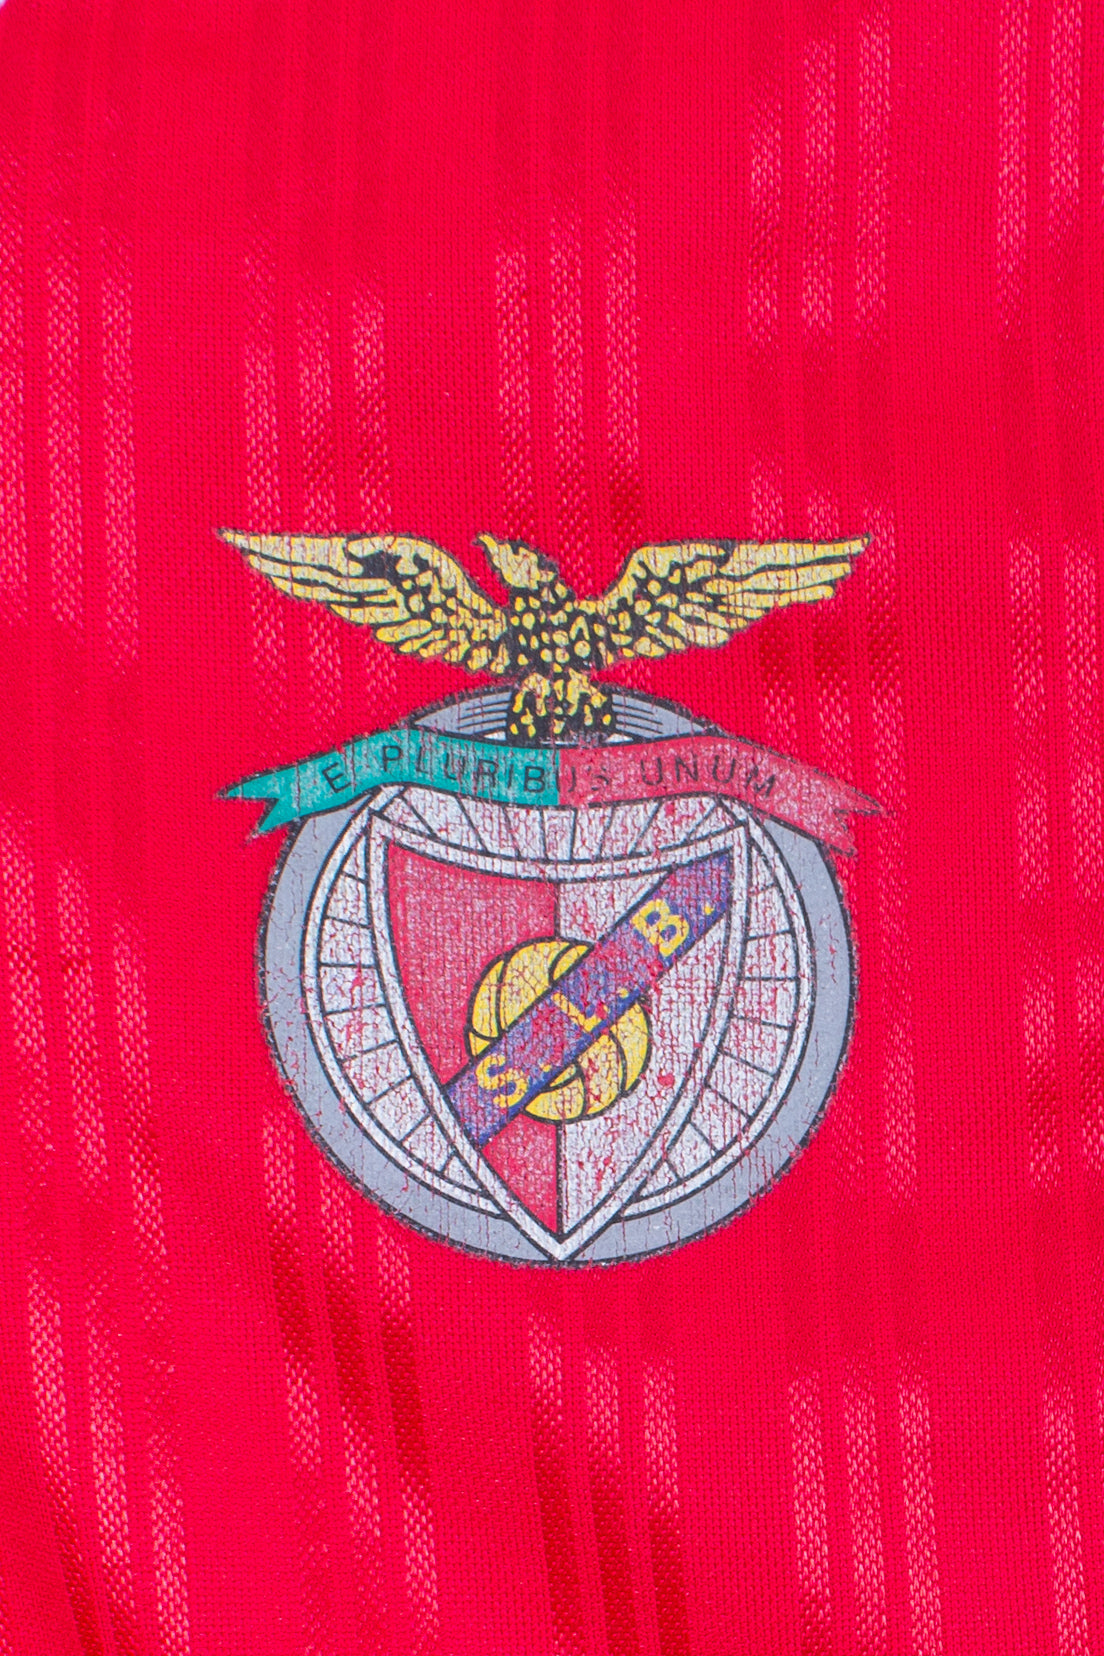 Benfica 1997/98 European Home Shirt (M)